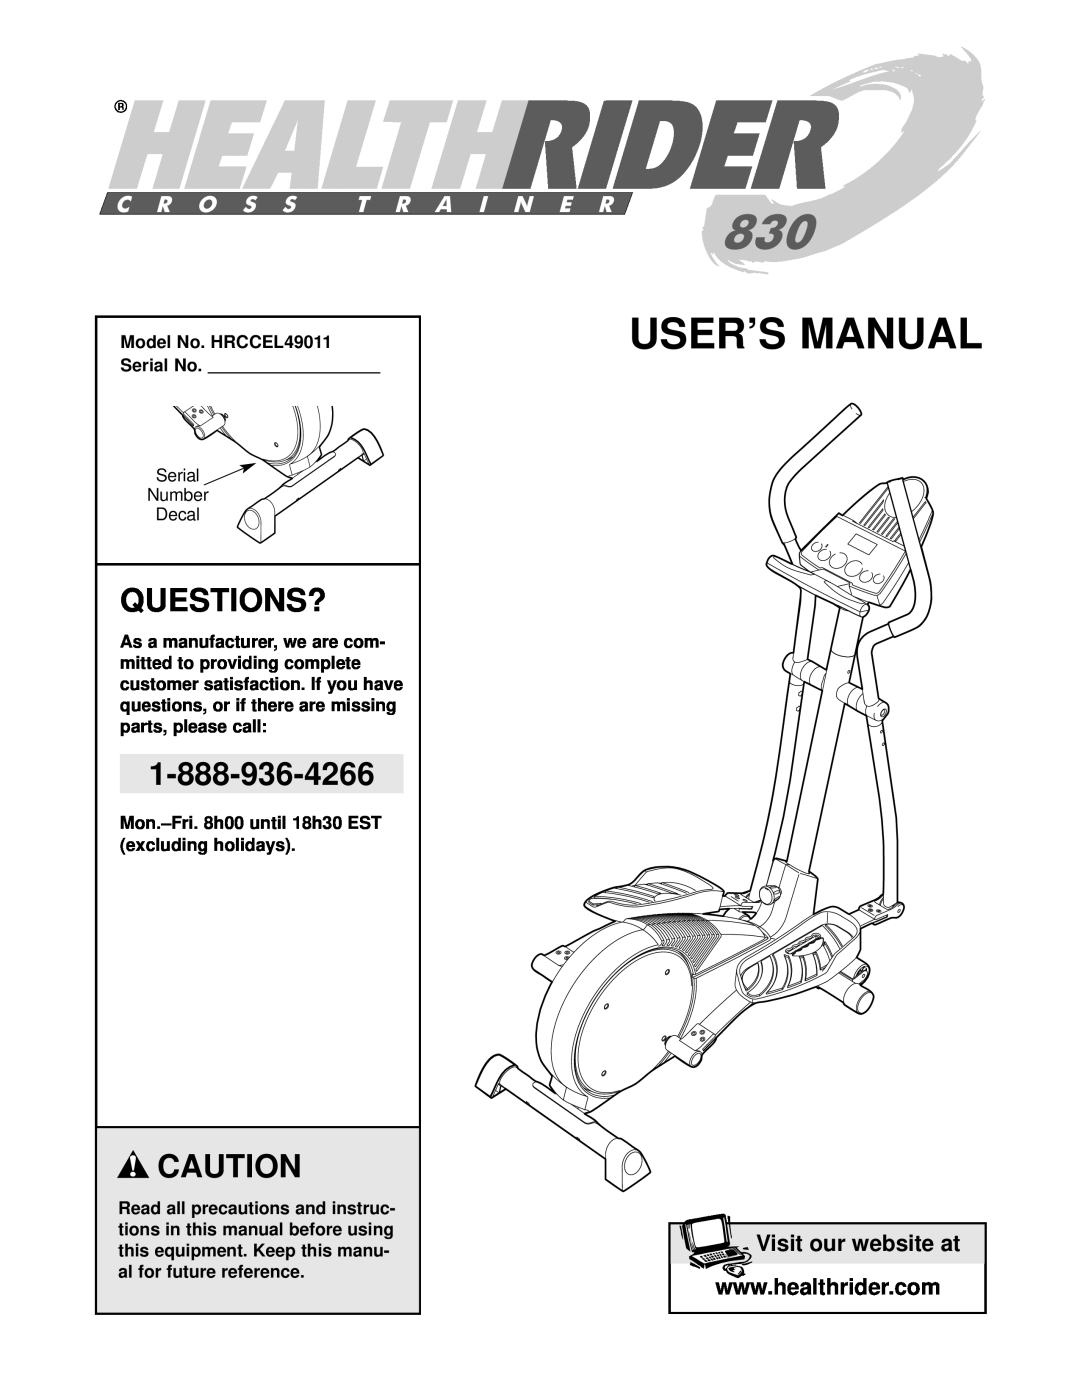 Healthrider manual Questions?, Model No. HRCCEL49011 Serial No, User’S Manual, Visit our website at 